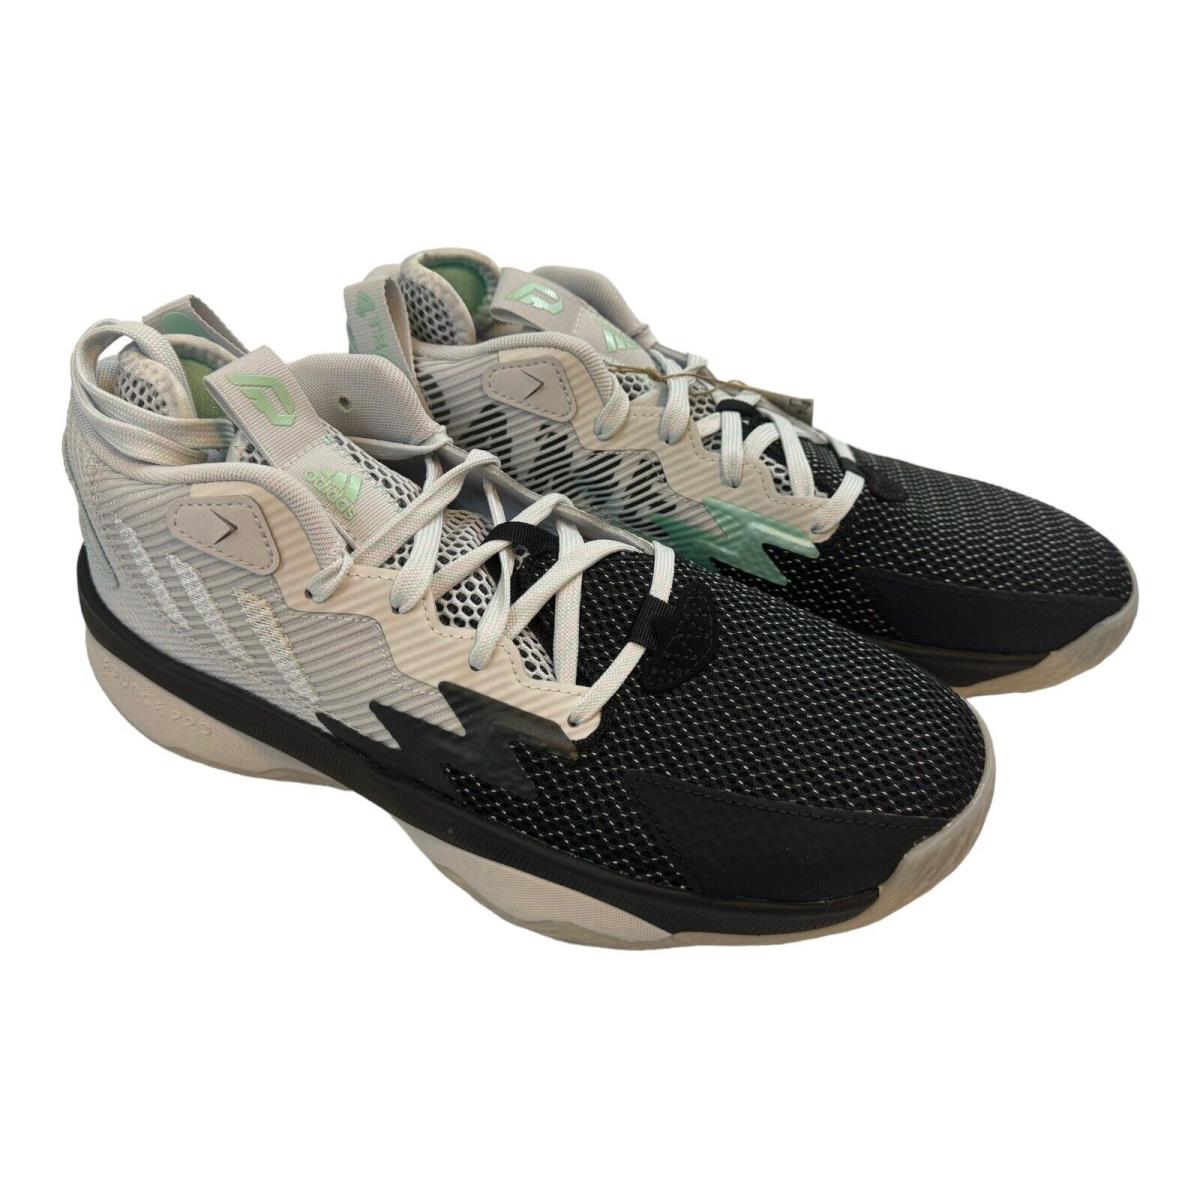 Adidas Dame 8 Basketball Shoes Dash Gray Black GY0379 Men`s Size 8.5